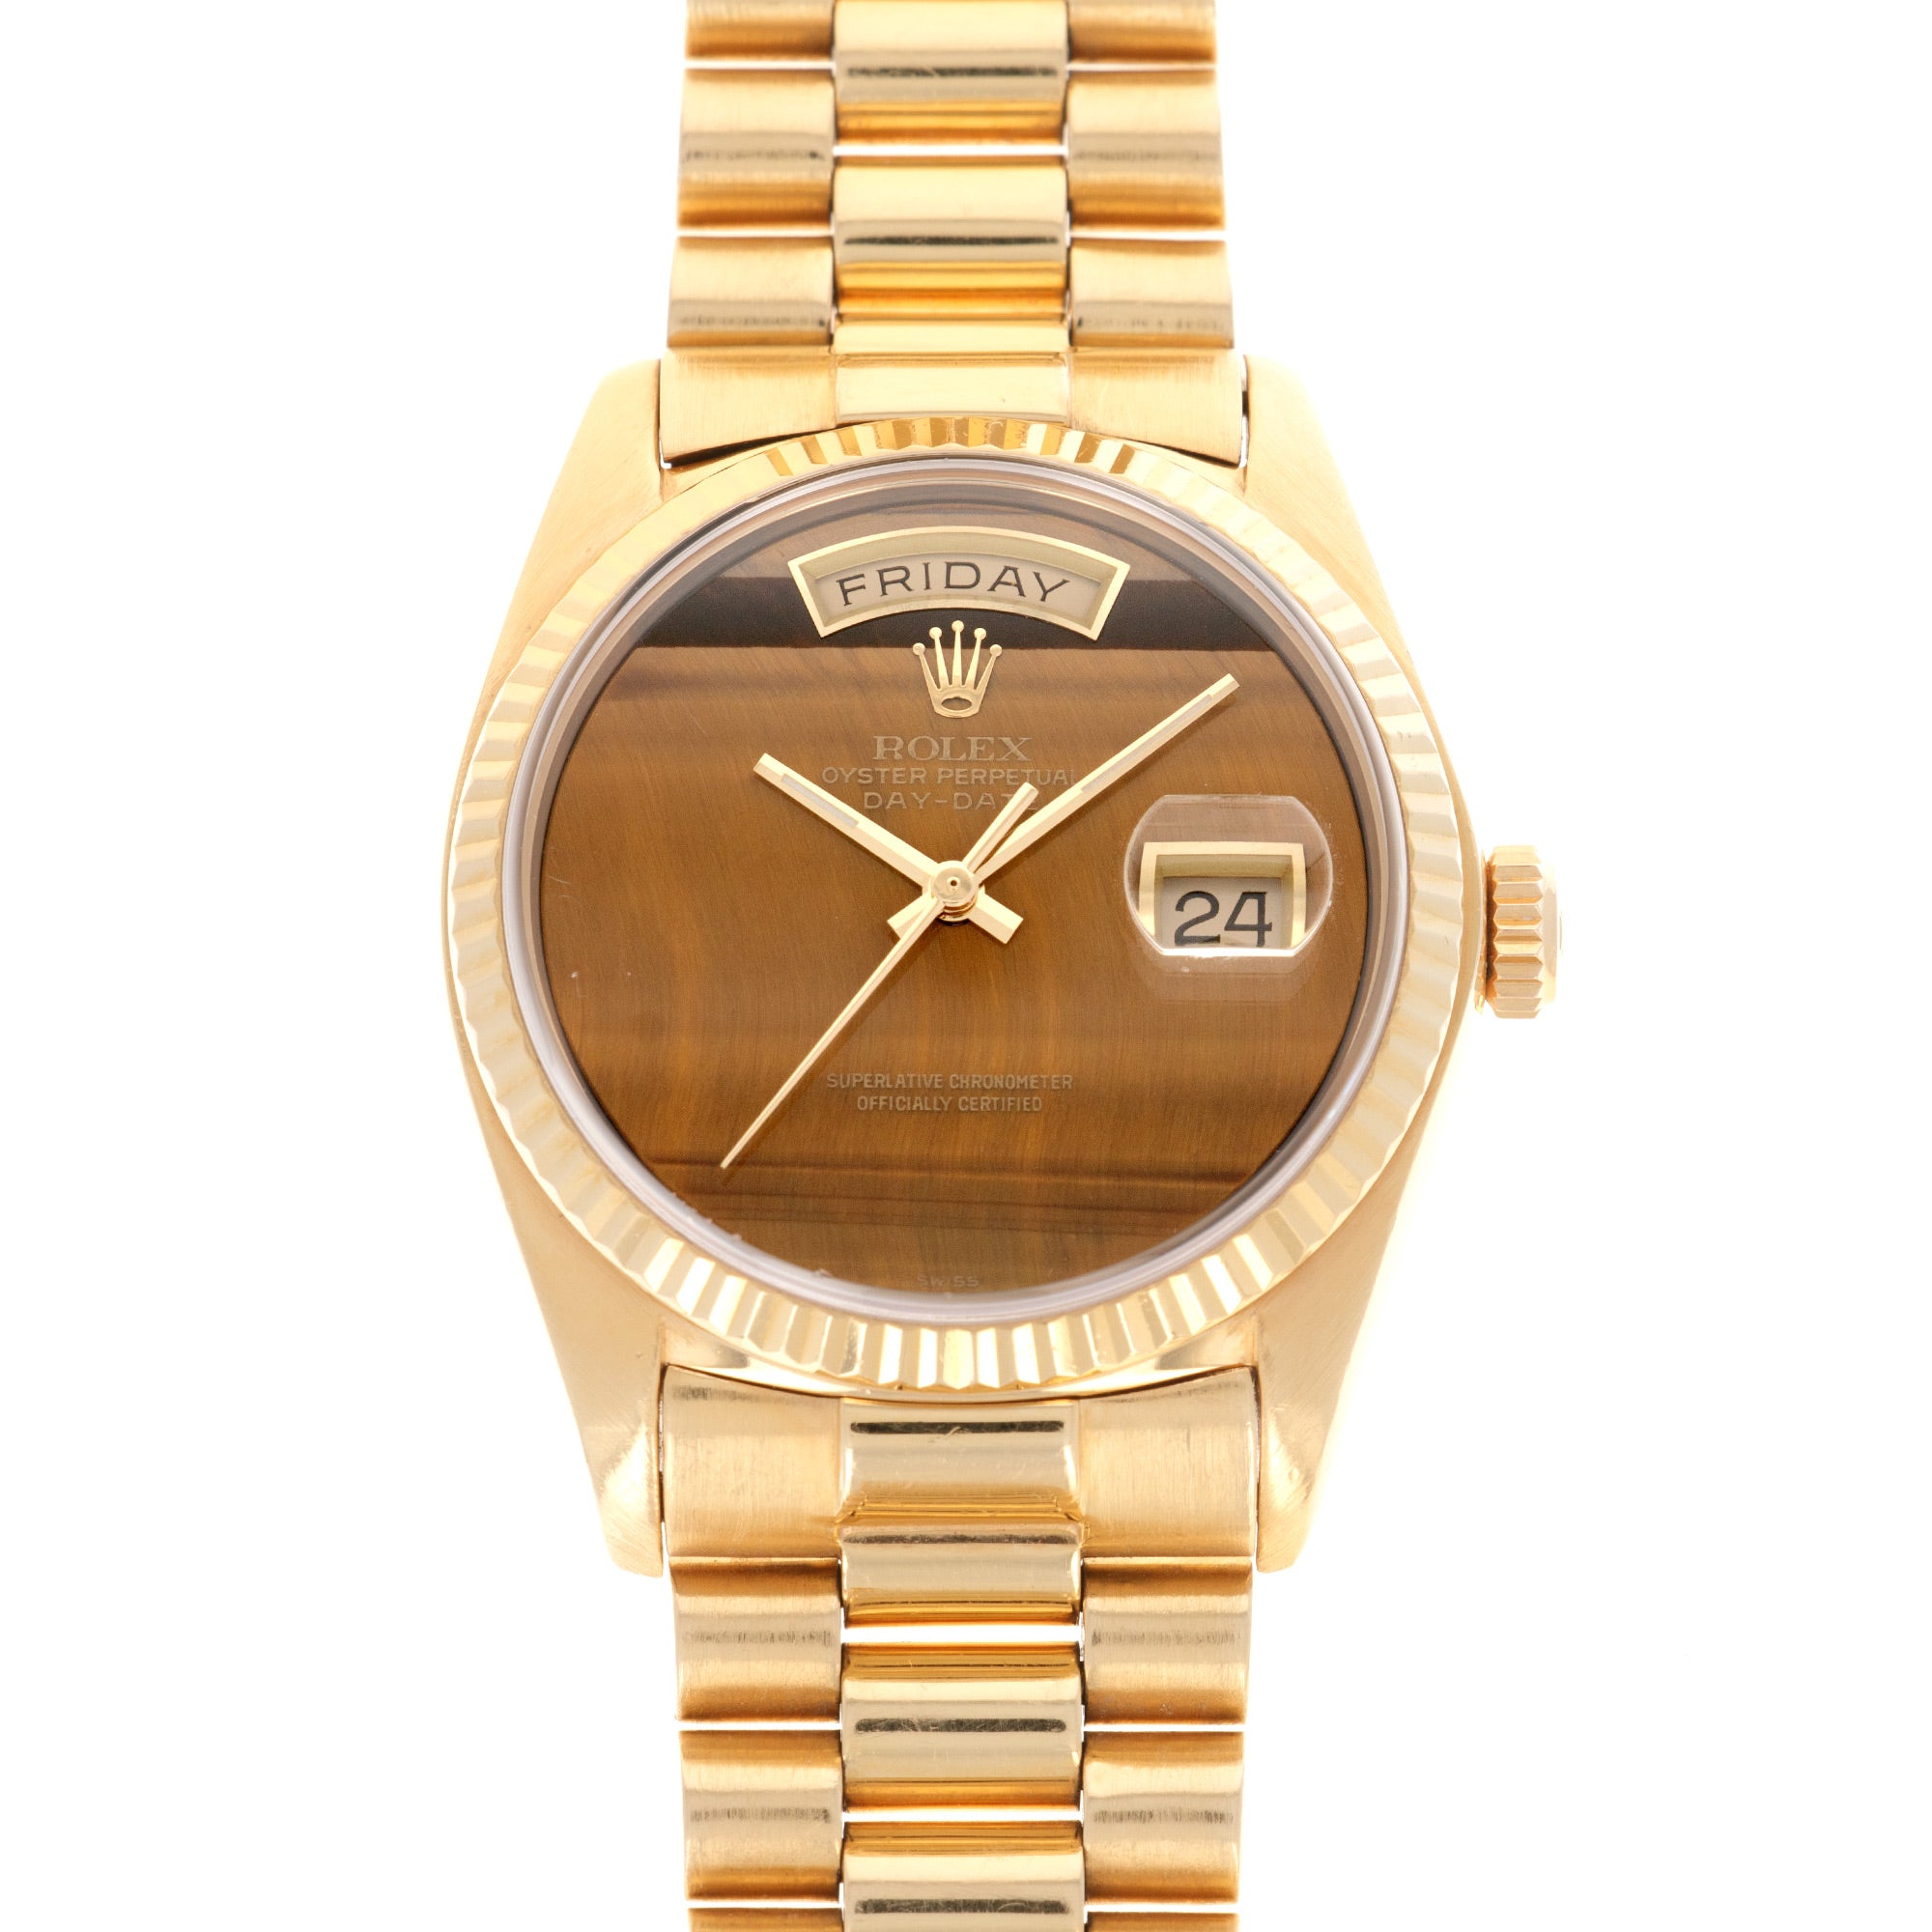 Rolex - Rolex Yellow Gold Day-Date Tigers Eye Watch, Ref. 18038 - The Keystone Watches